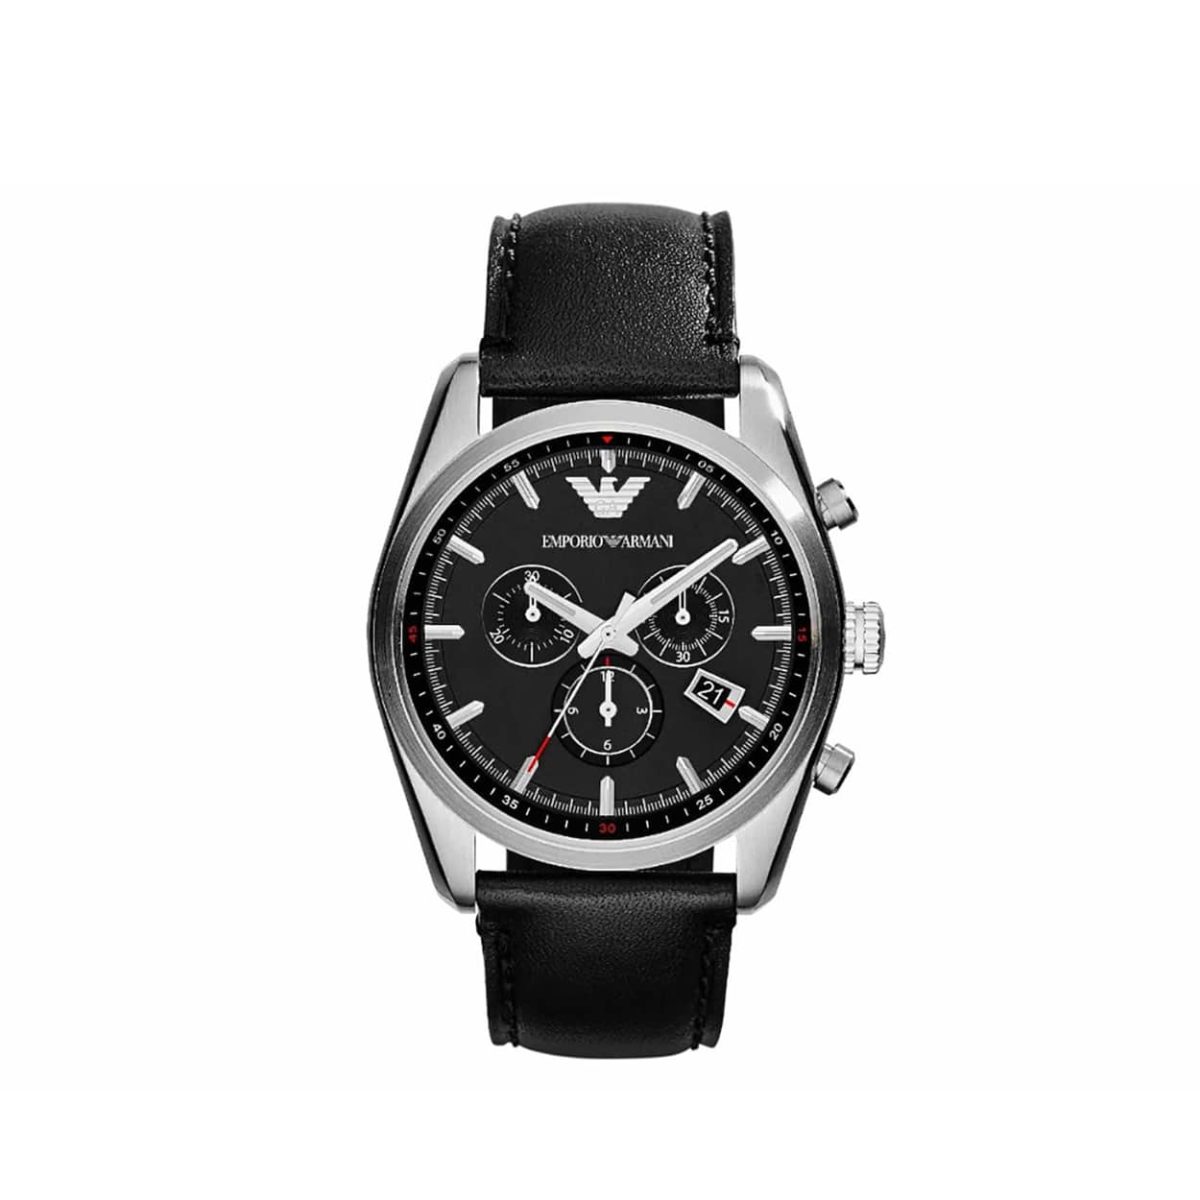 Emporio Armani Sportivo Black Leather Chronograph Men's Watch - AR6039